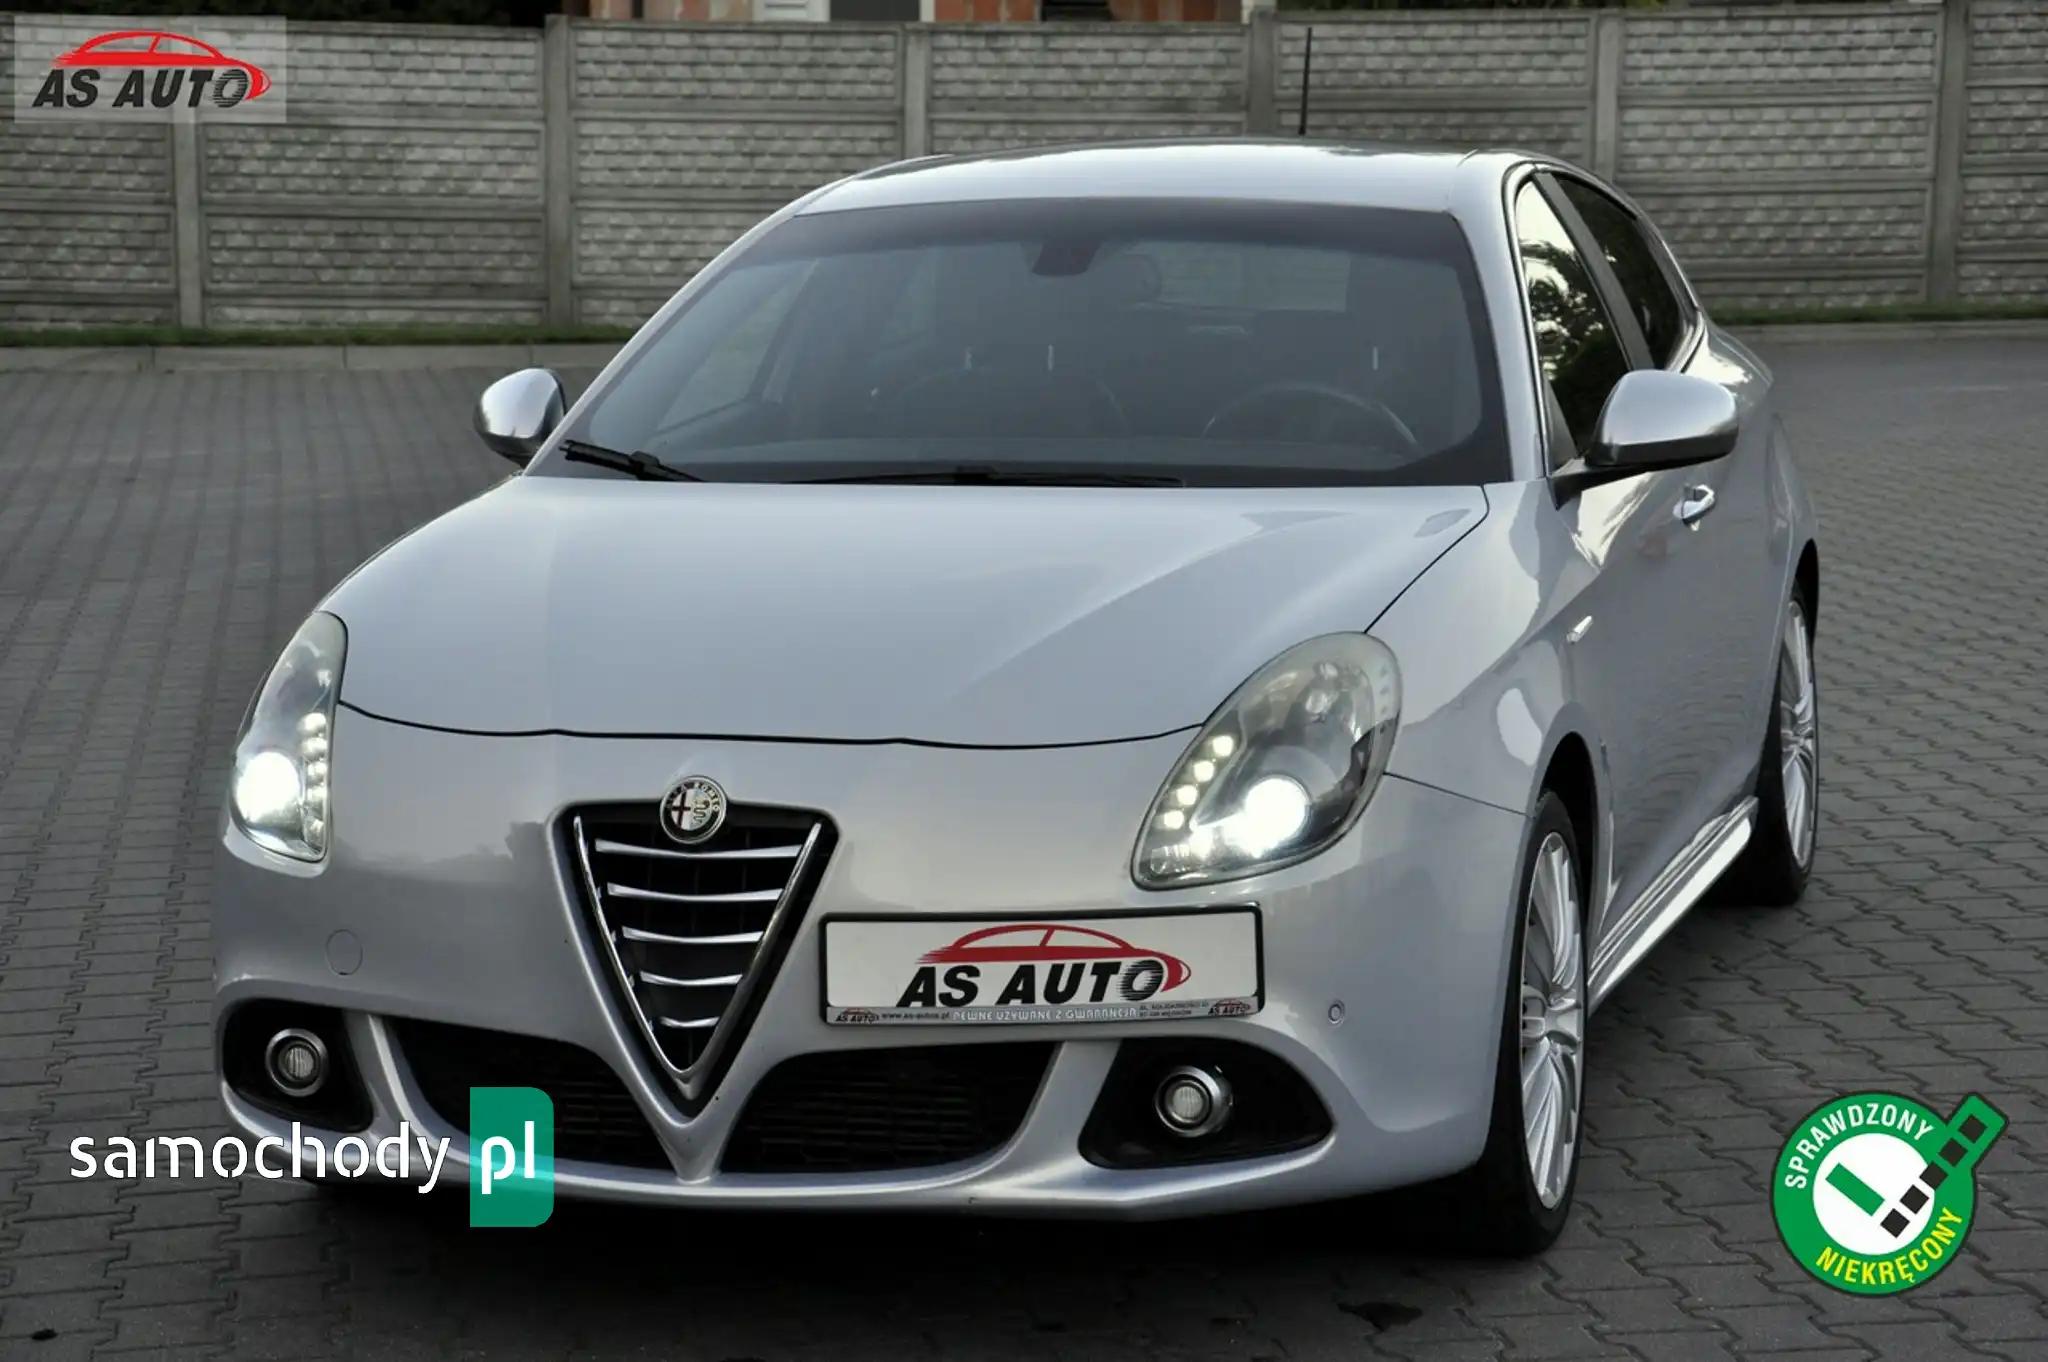 Alfa Romeo Giulietta Hatchback 2015